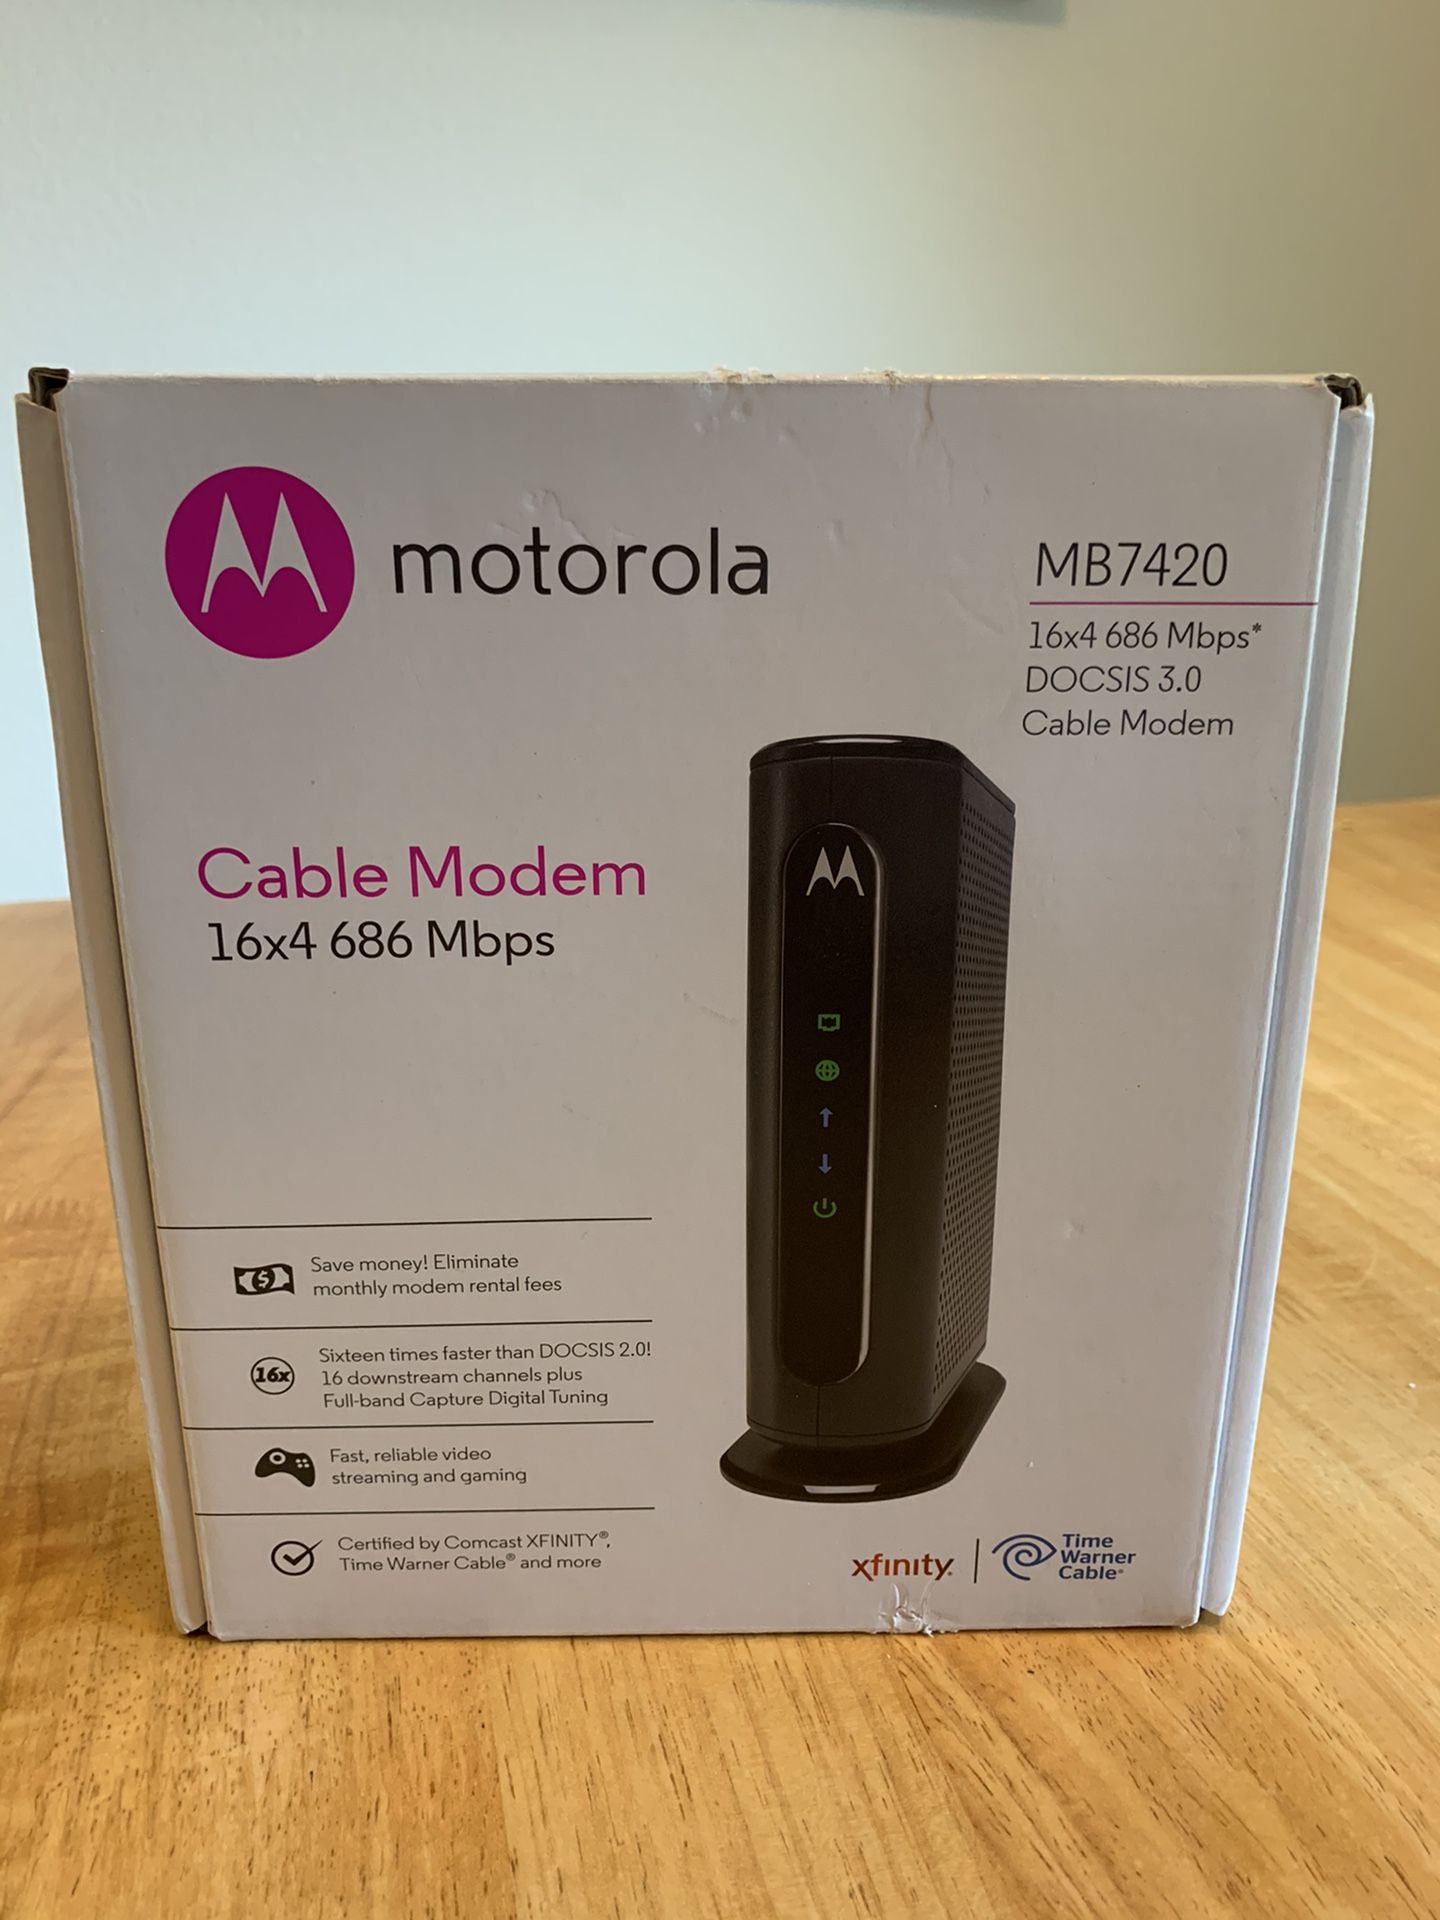 Cable Modem (Motorola MB7420)